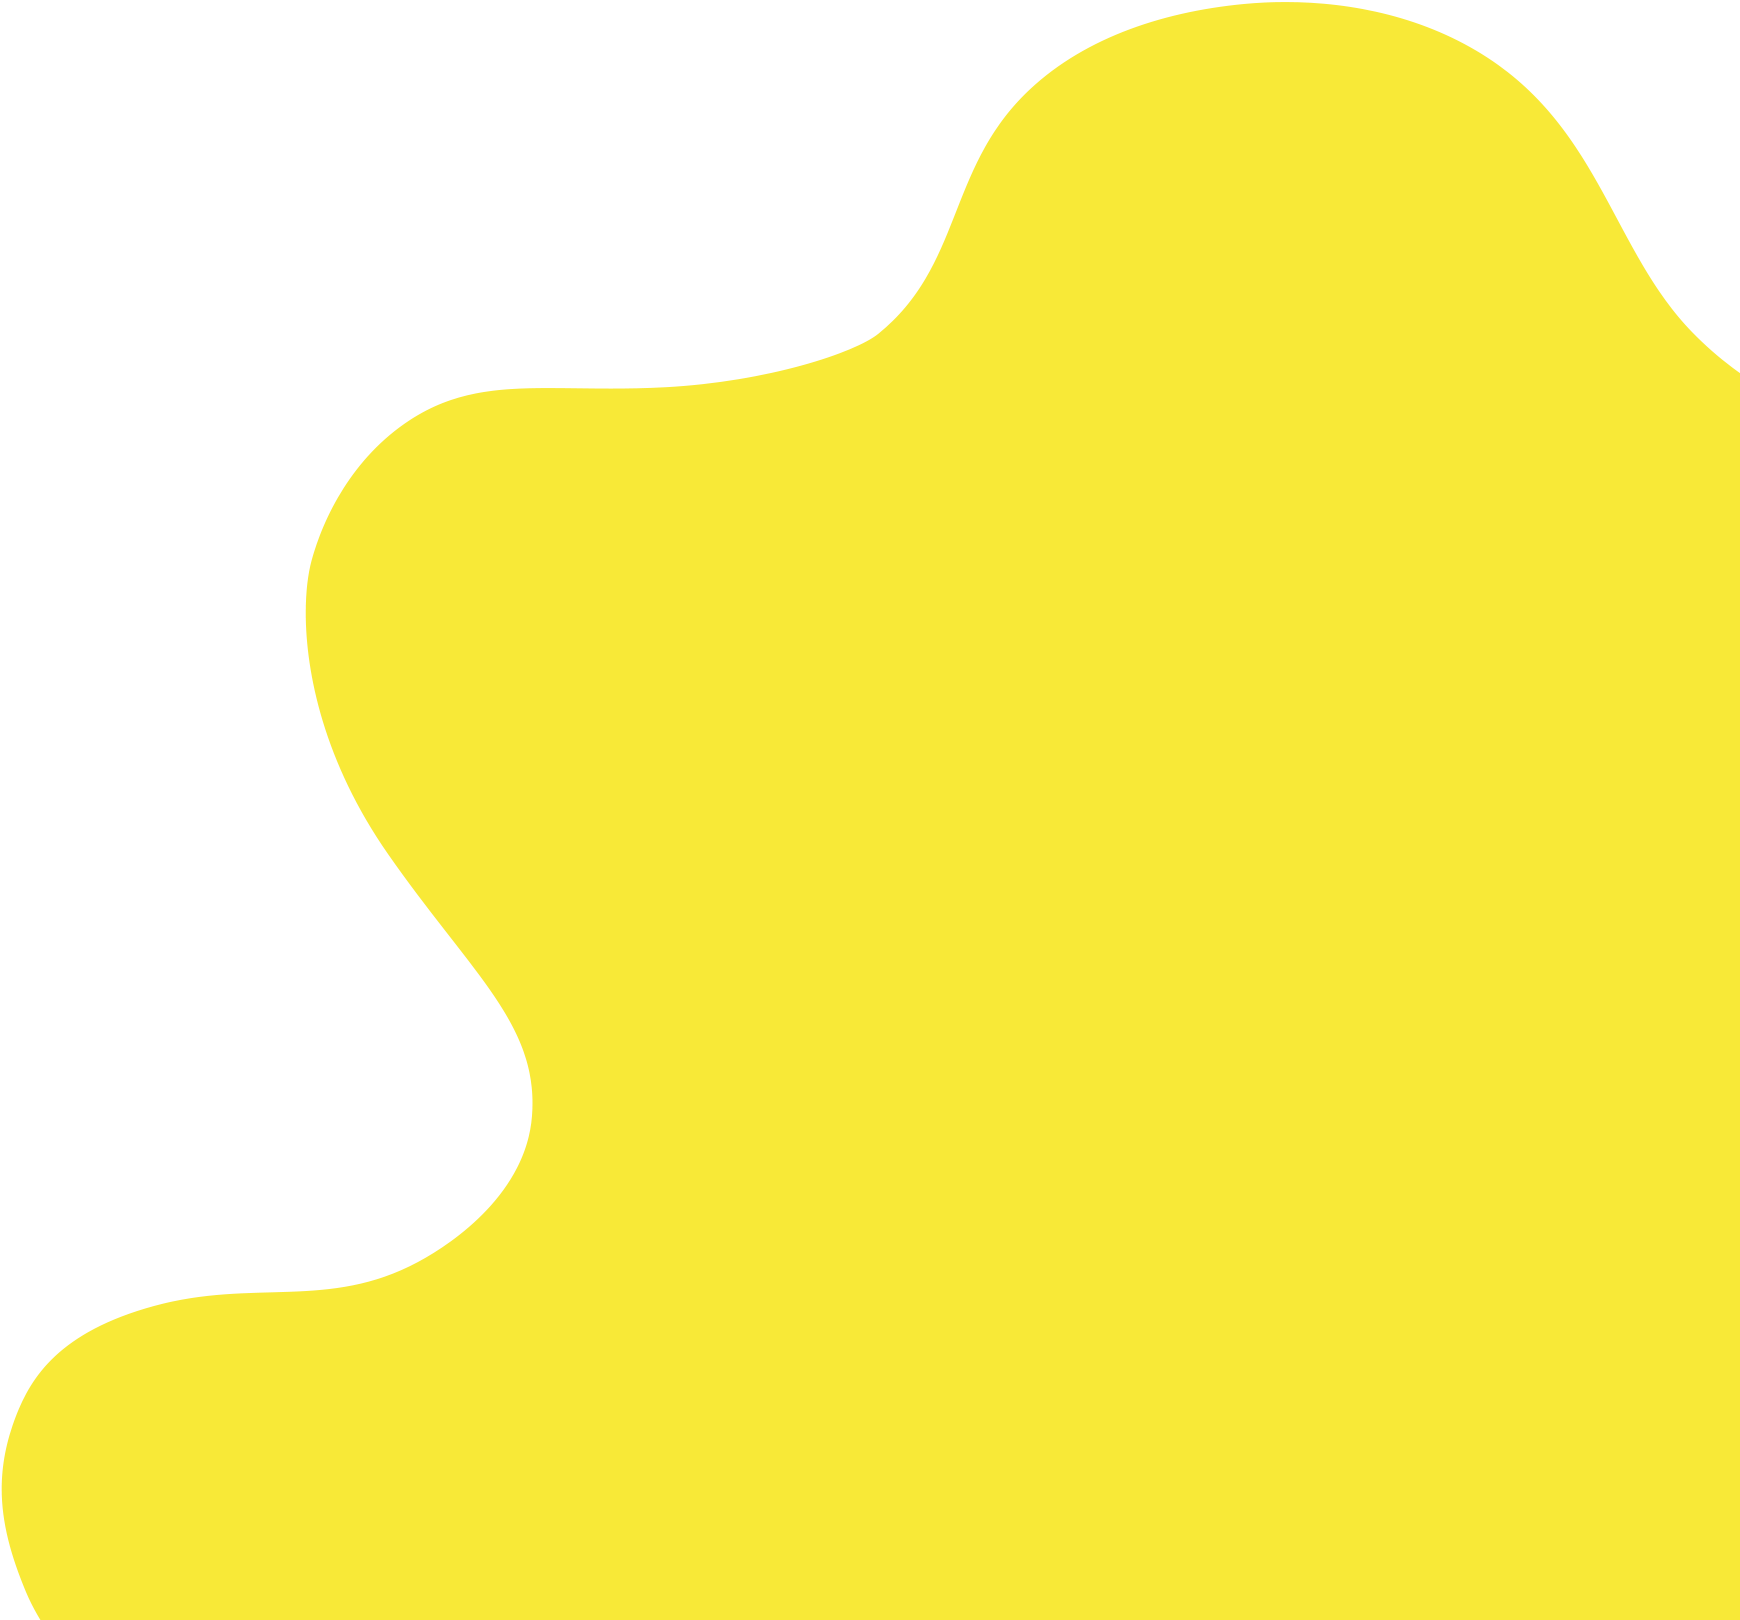 Yellow shape